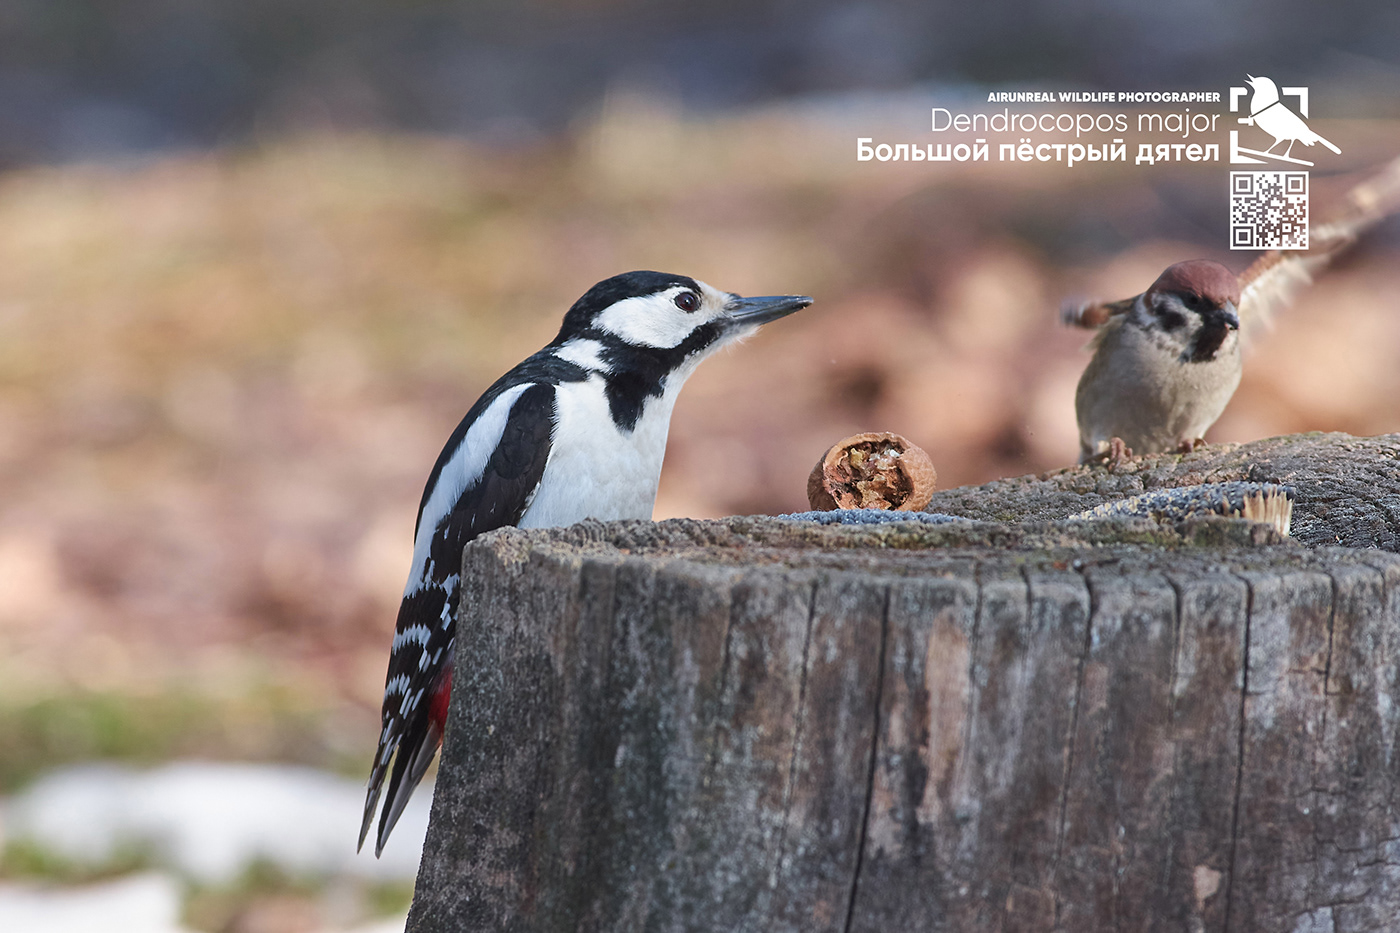 bird birds birdswatching volgograd Russia wildlife dendrocopos major Great Spotted Woodpecker